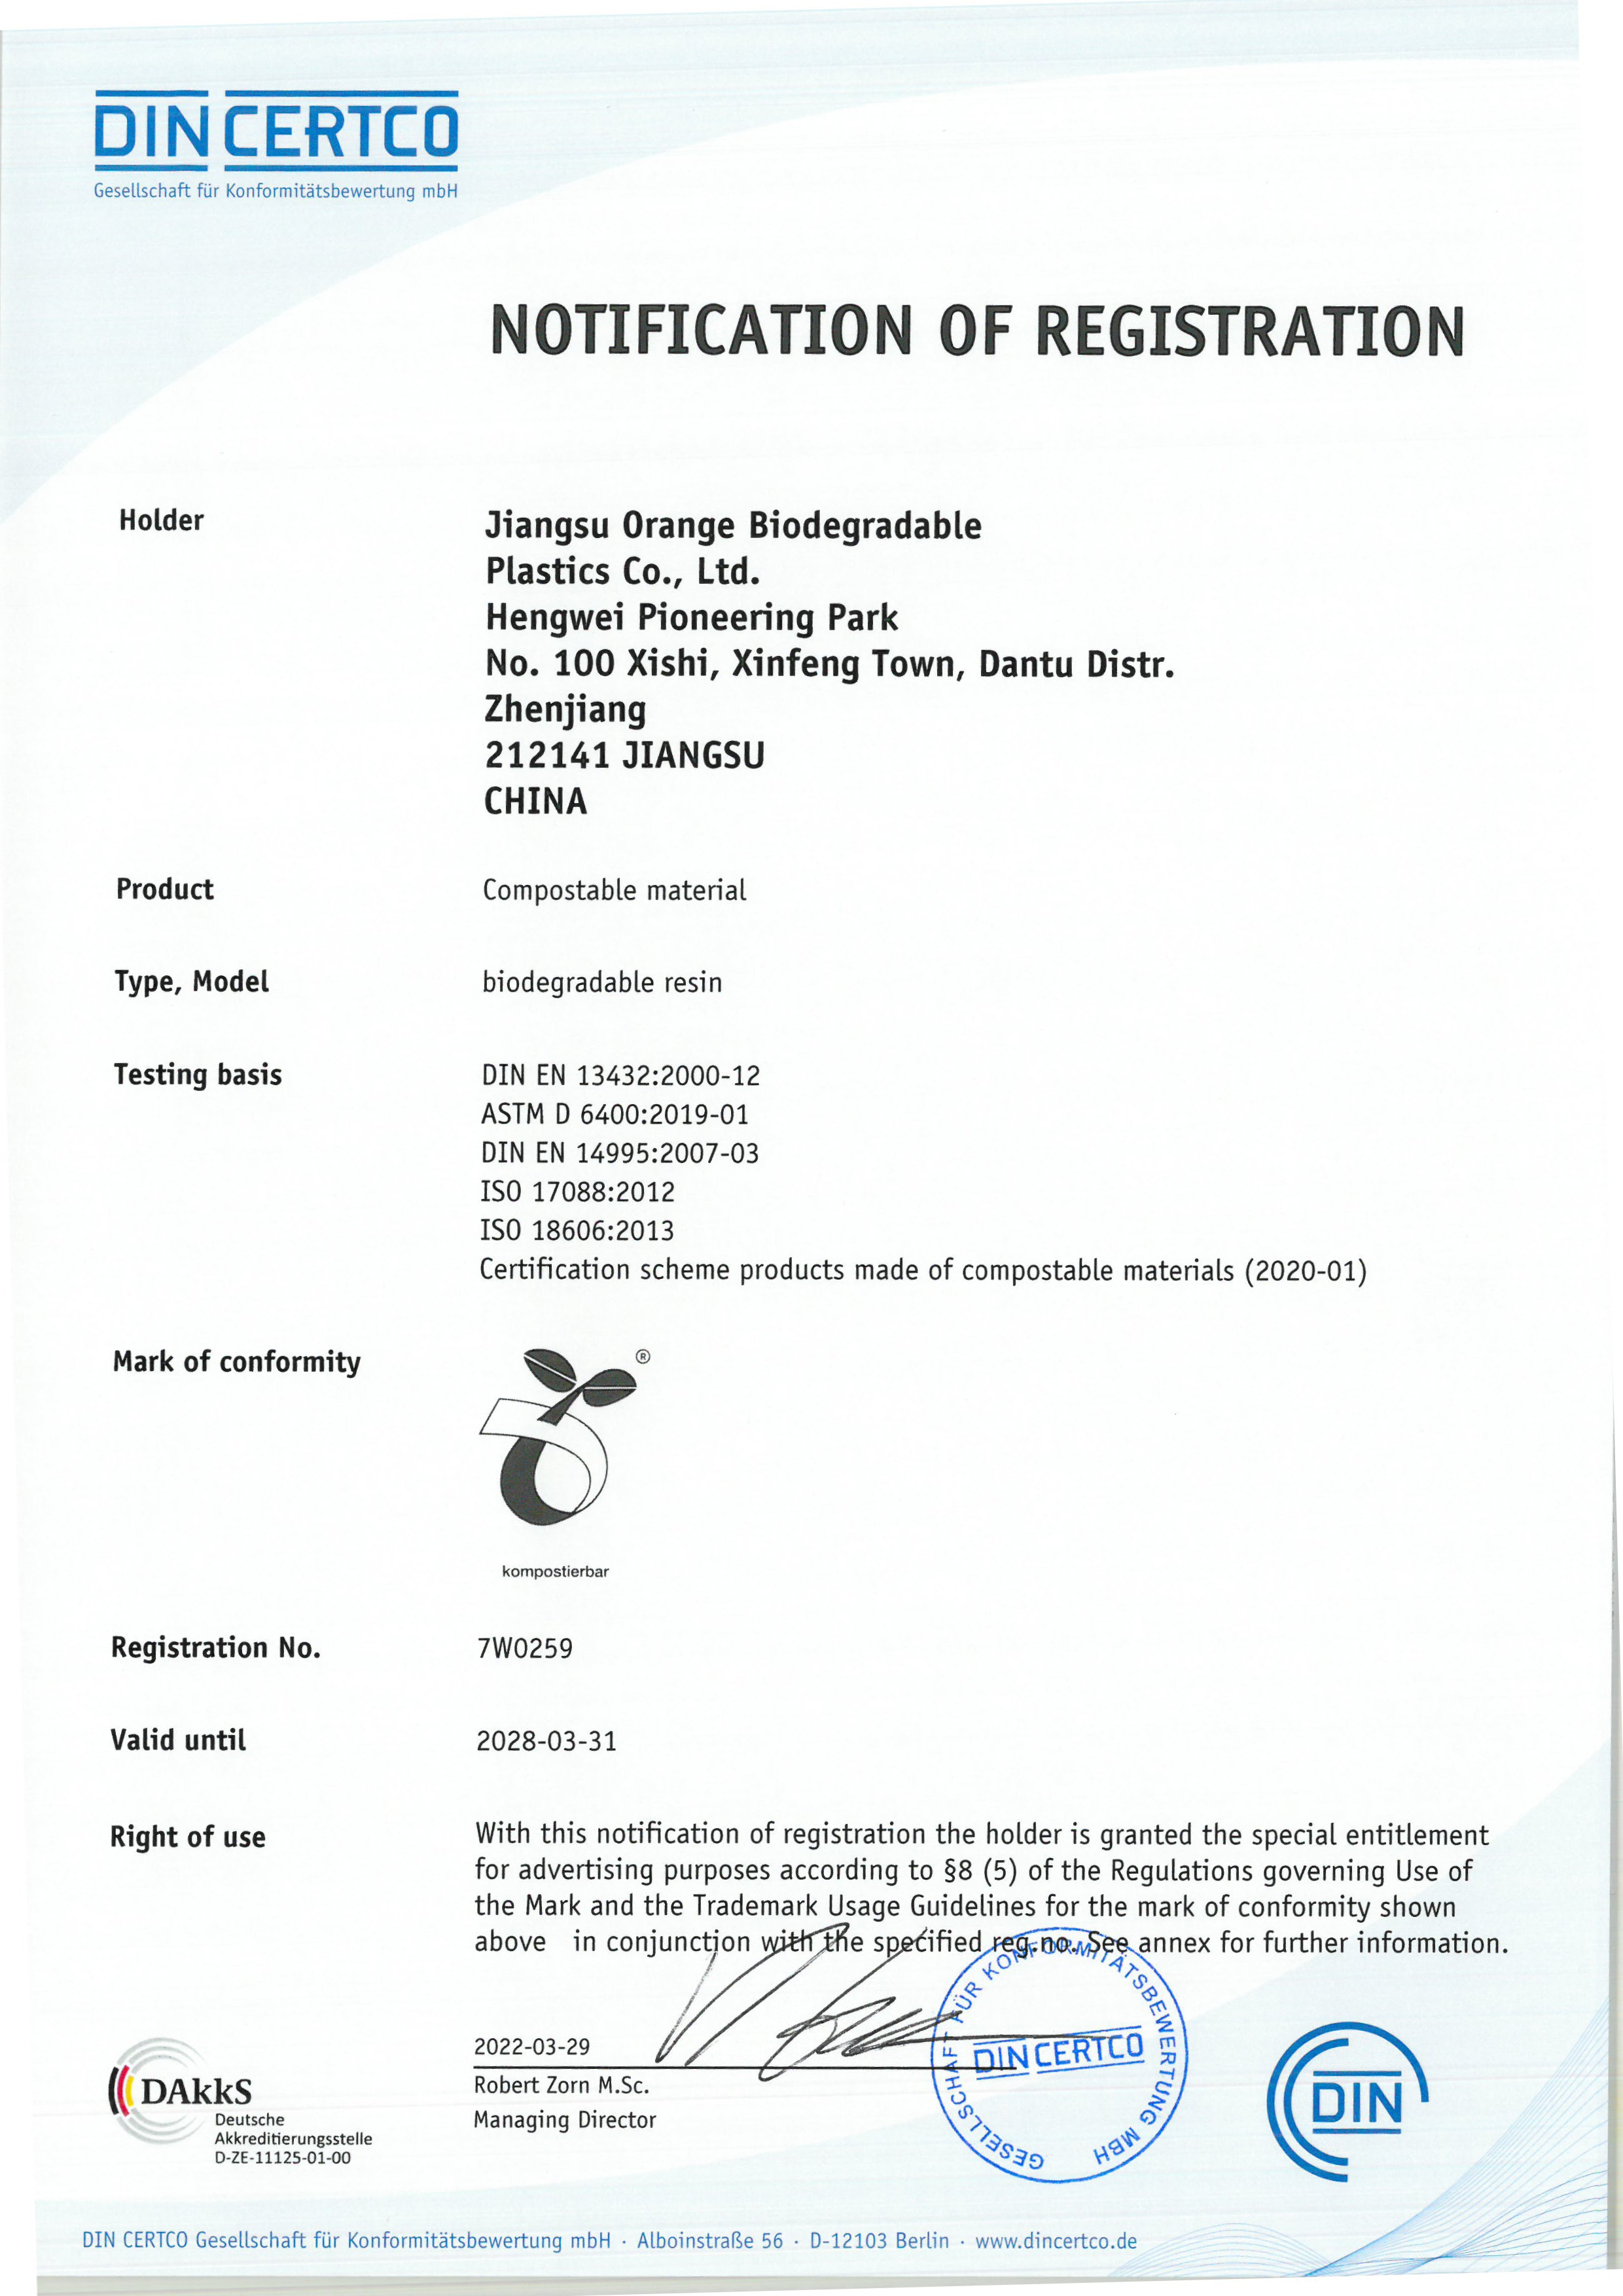 DIN CERTCO Certificate-Biodegradable Resin